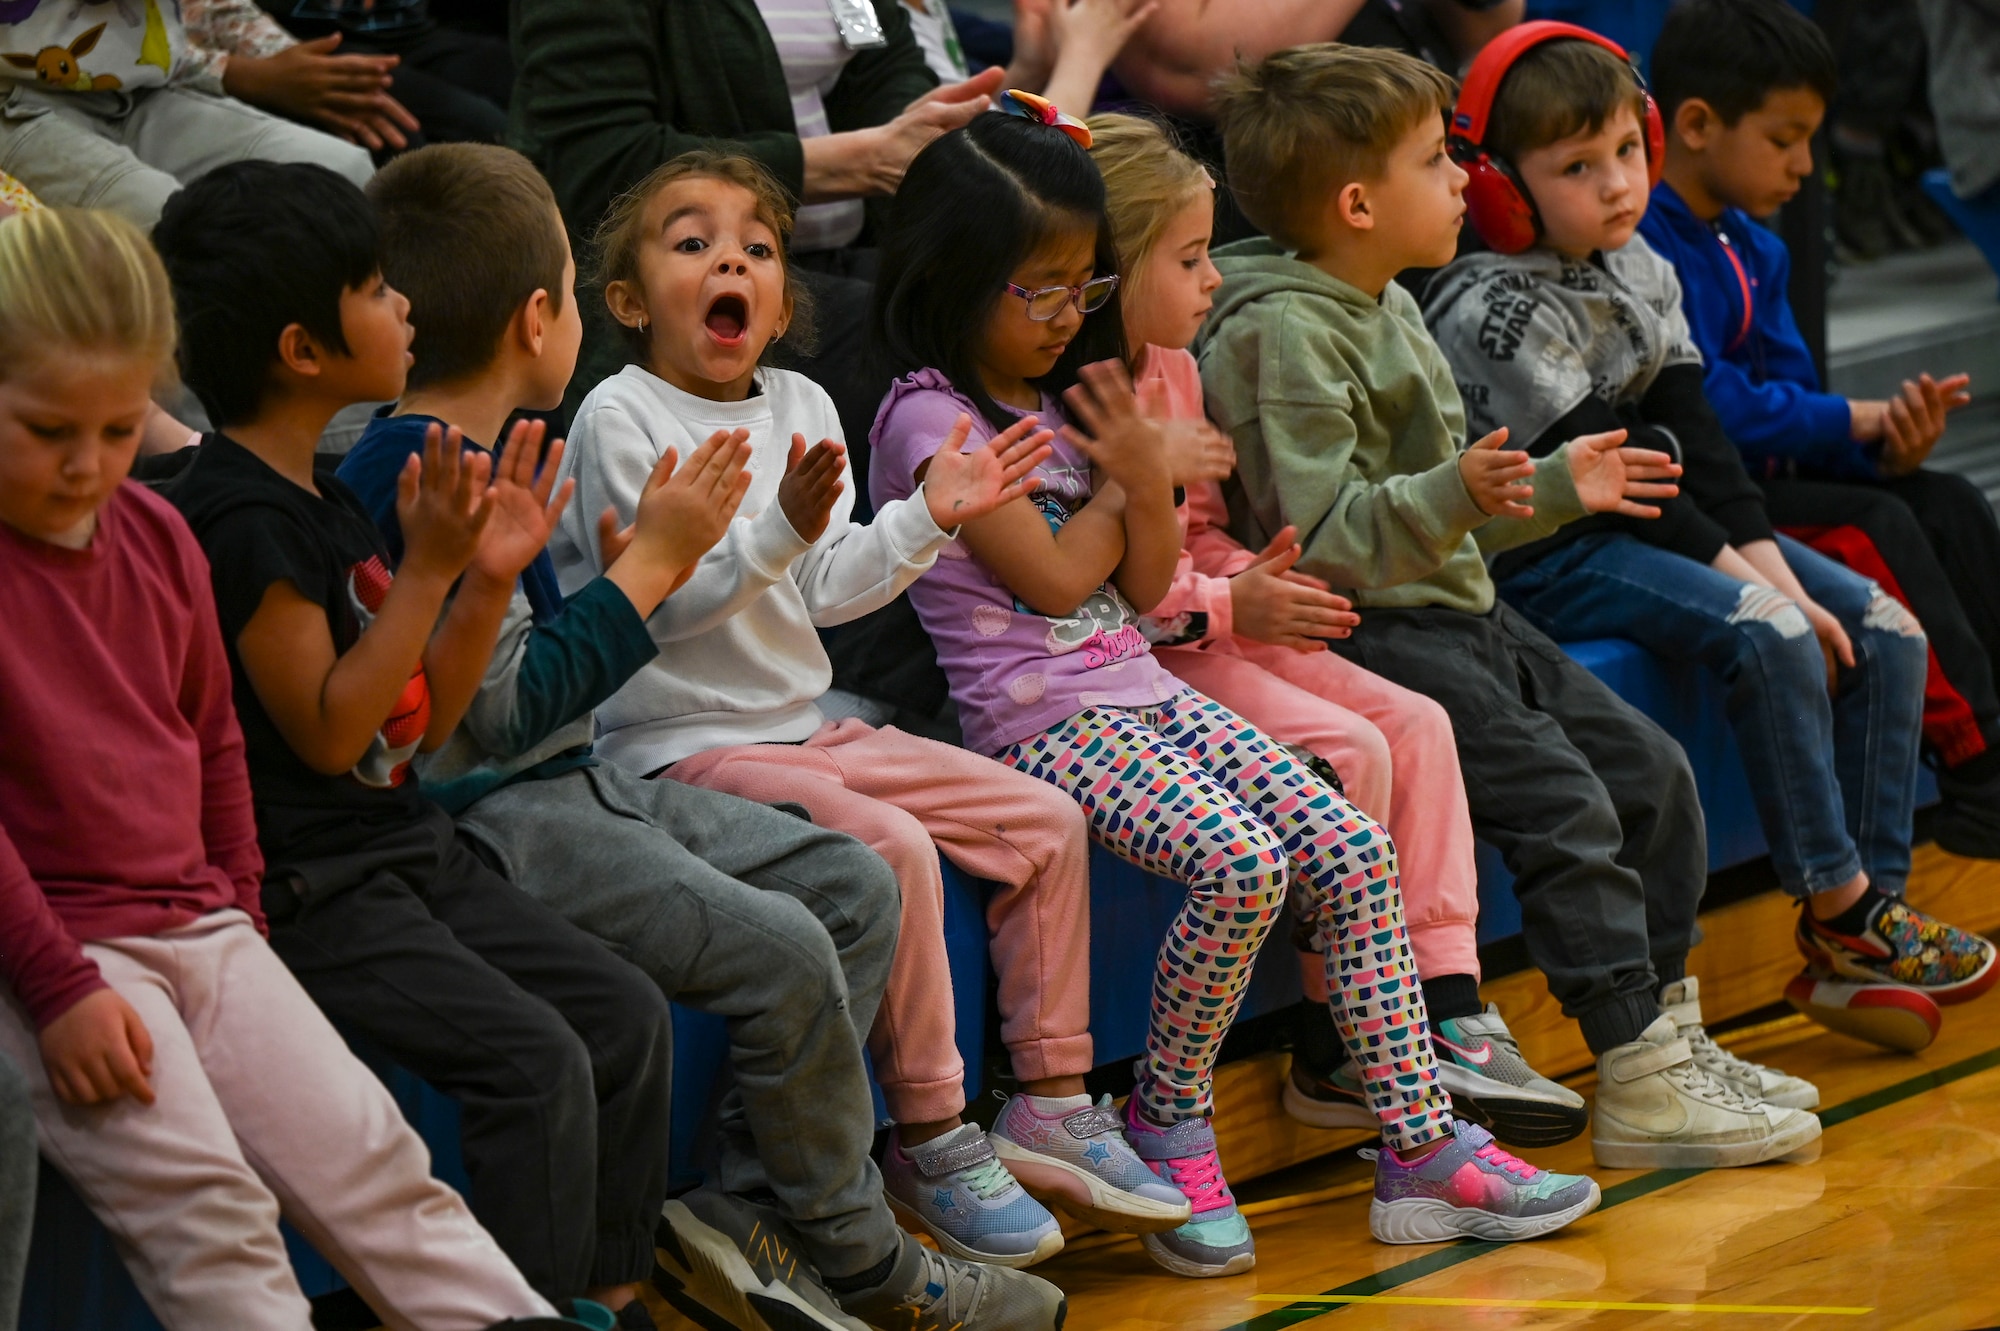 Children applaud in an audience.